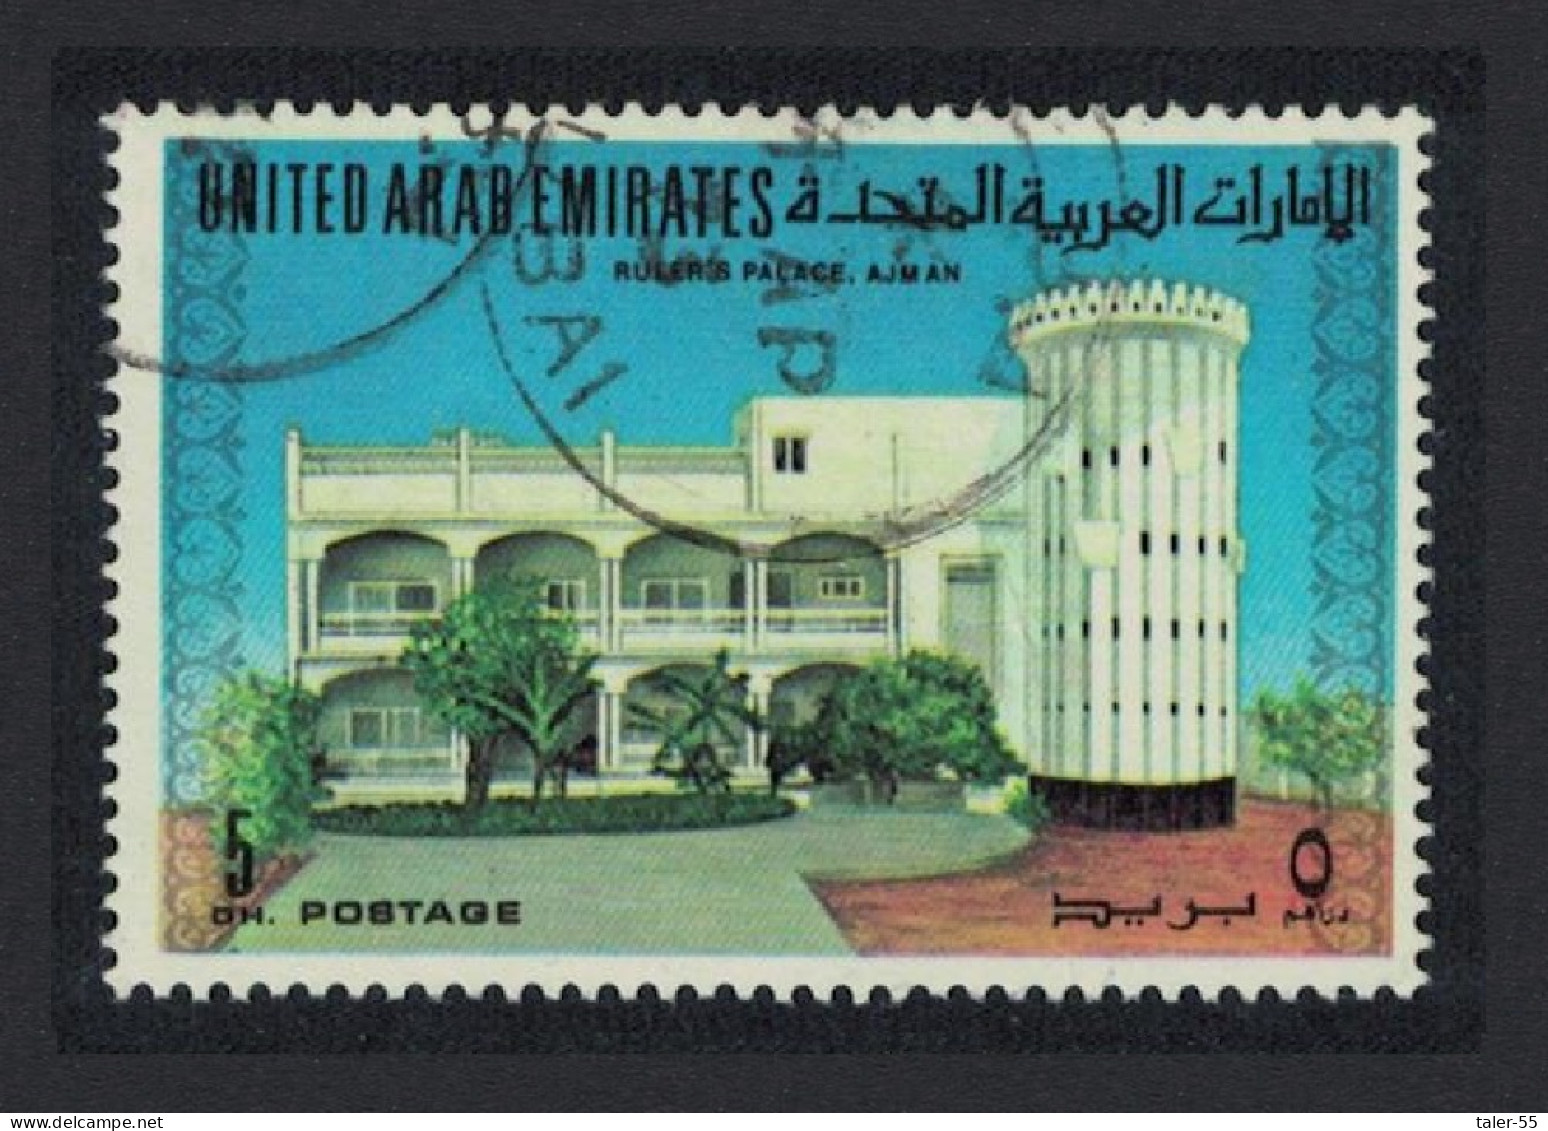 United Arab Emirates Ruler's Palace Ajman 5 Dh 1973 MNH SG#11 MI#11 - Emirats Arabes Unis (Général)